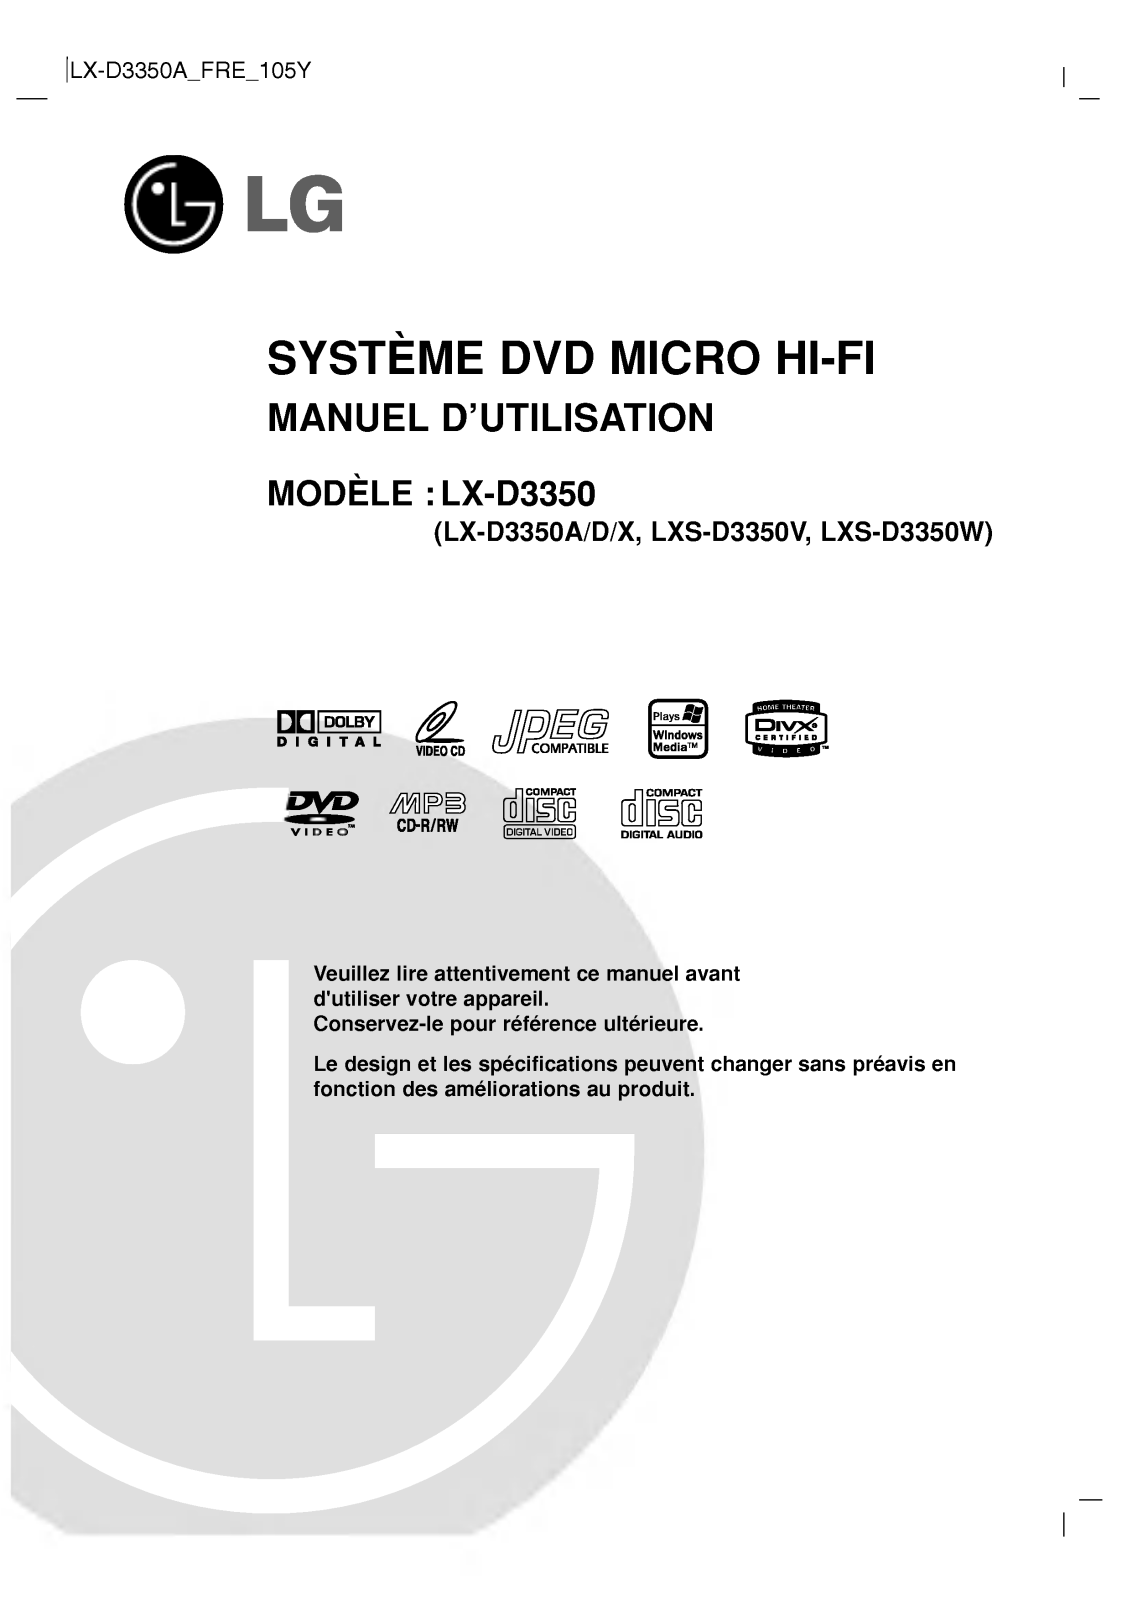 LG LX-D3350A Owner’s Manual